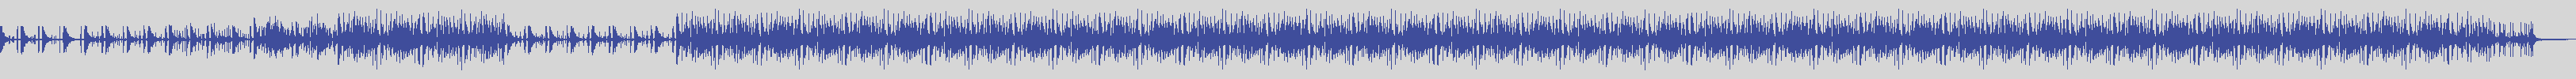 noclouds_chillout [NOC109] Pastilla Blanca - Emblematico [Original Mix] audio wave form